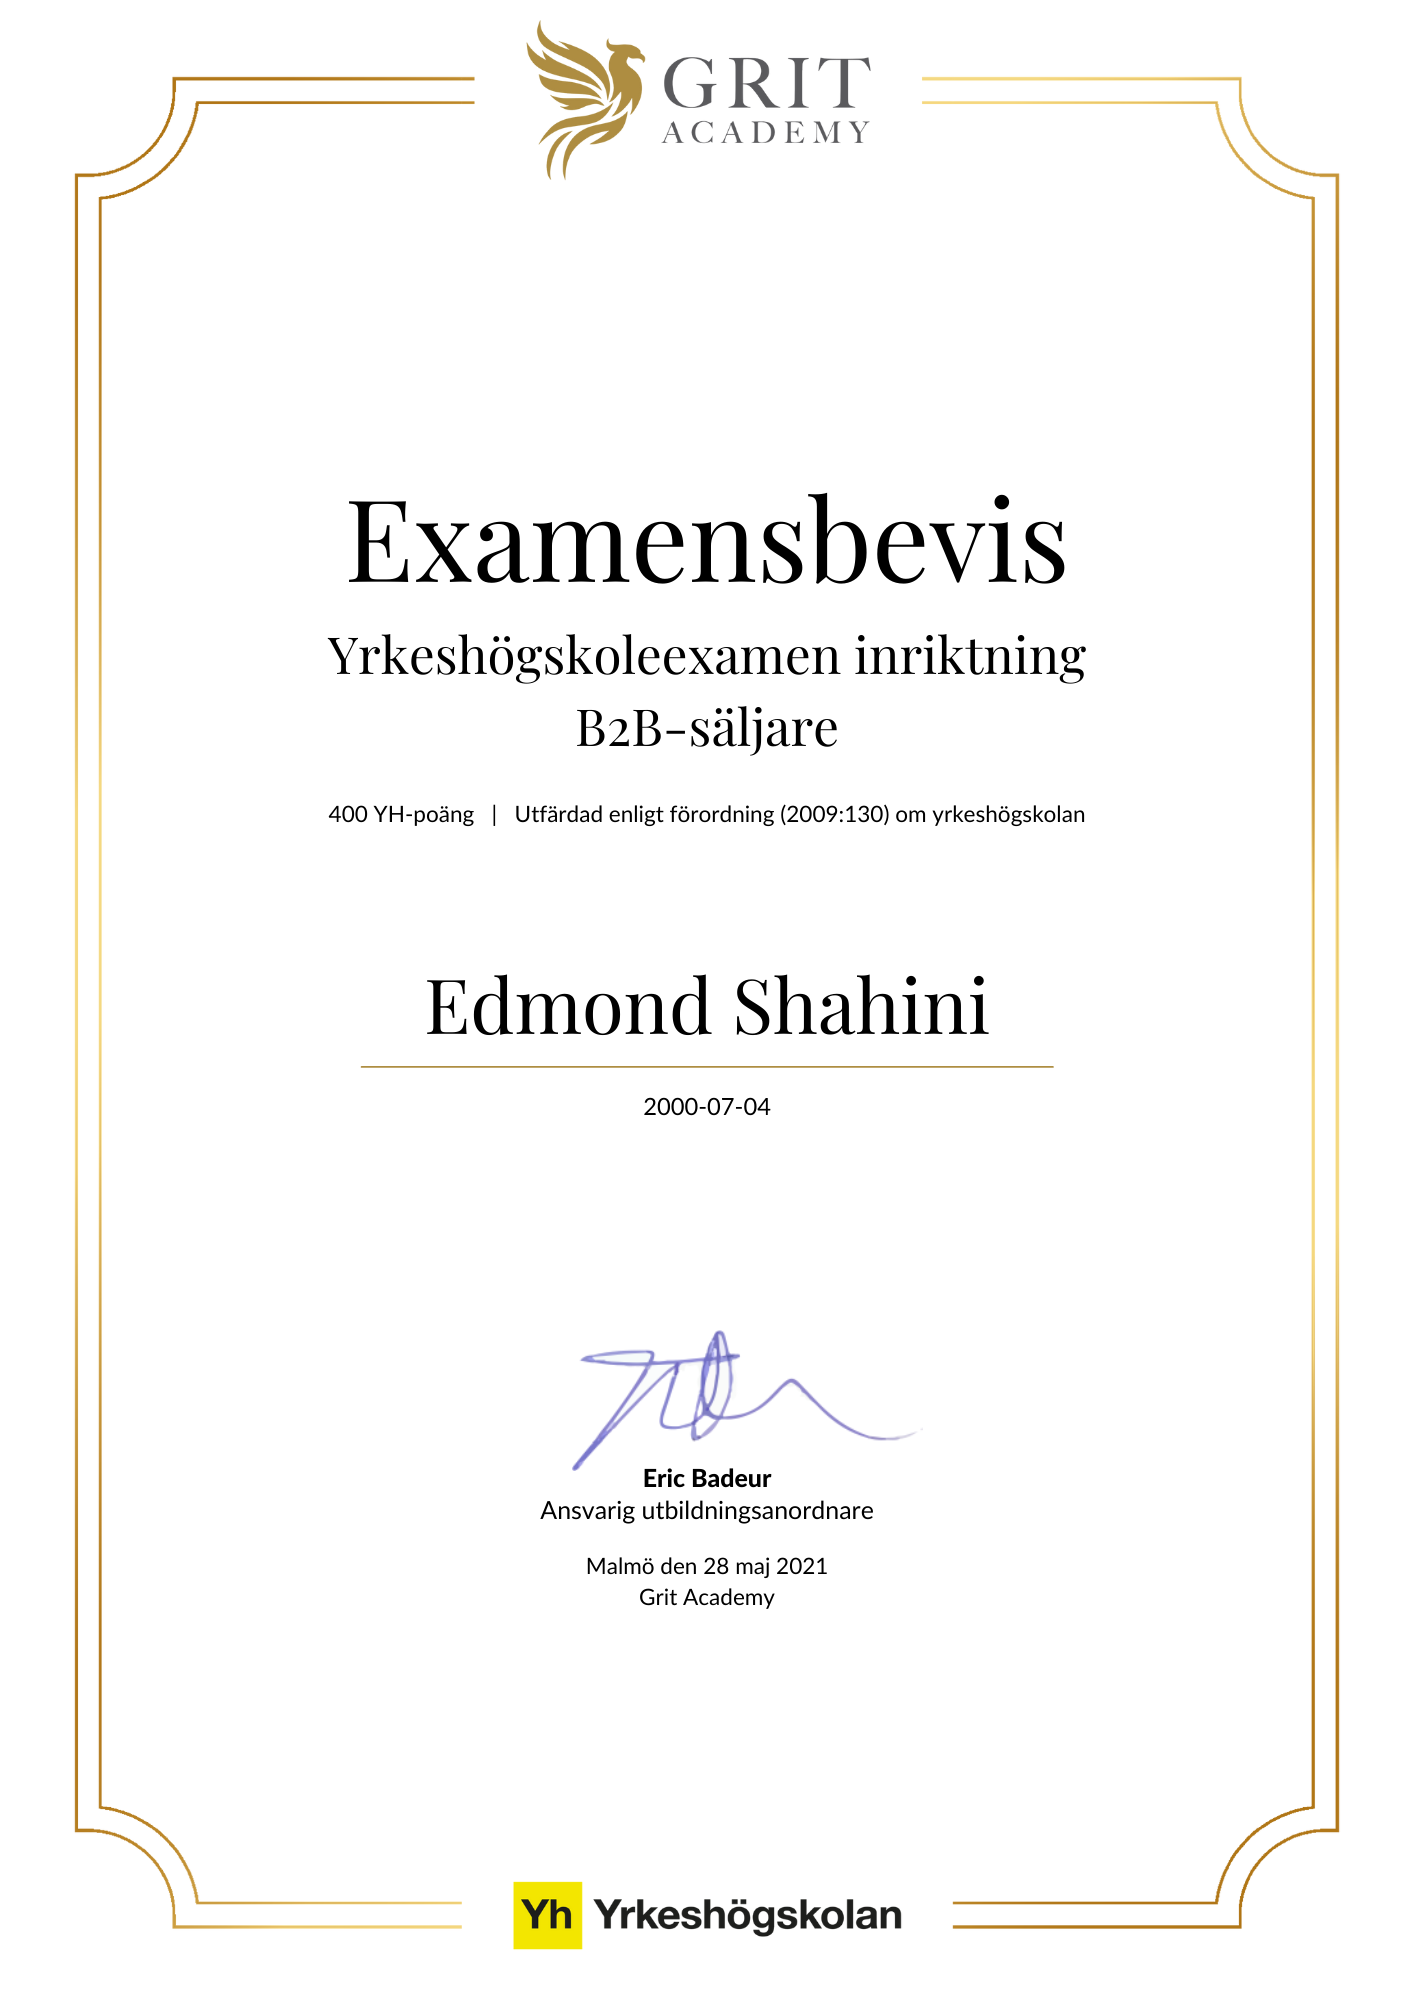 Examensbevis Edmond Shahini - 1